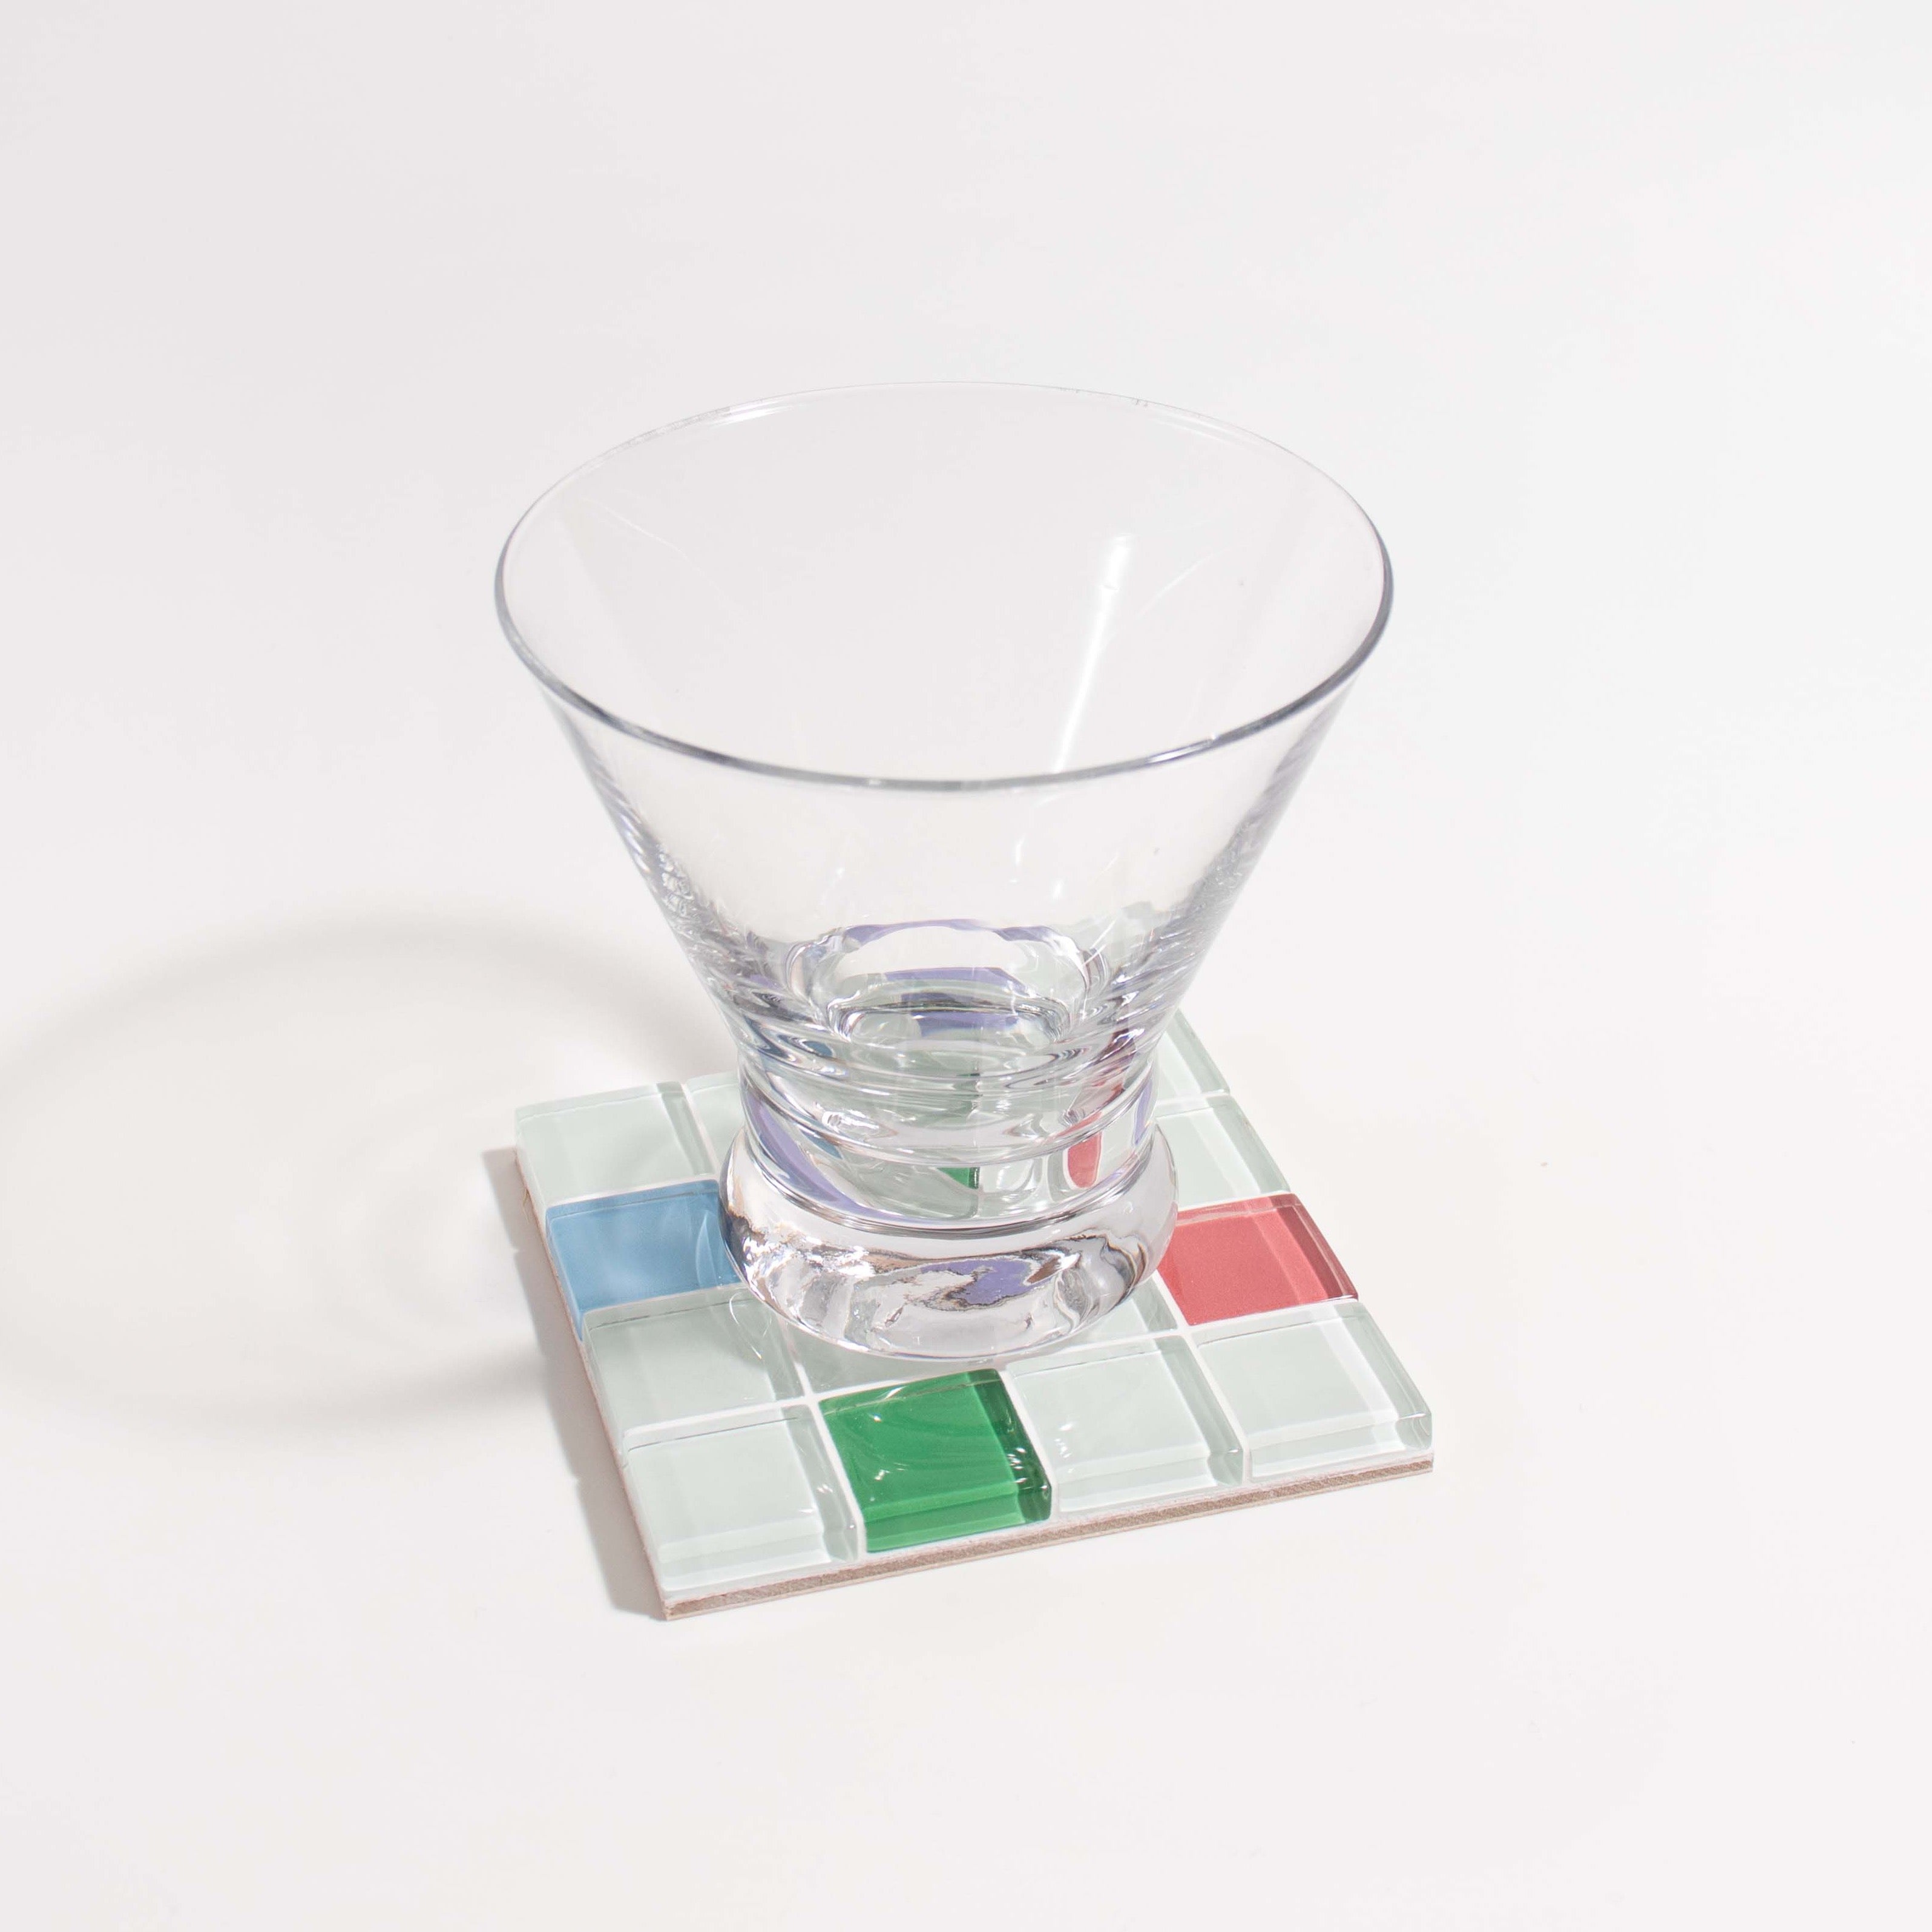 GLASS TILE COASTER - Randomness - Option 4 by Subtle Art Studios